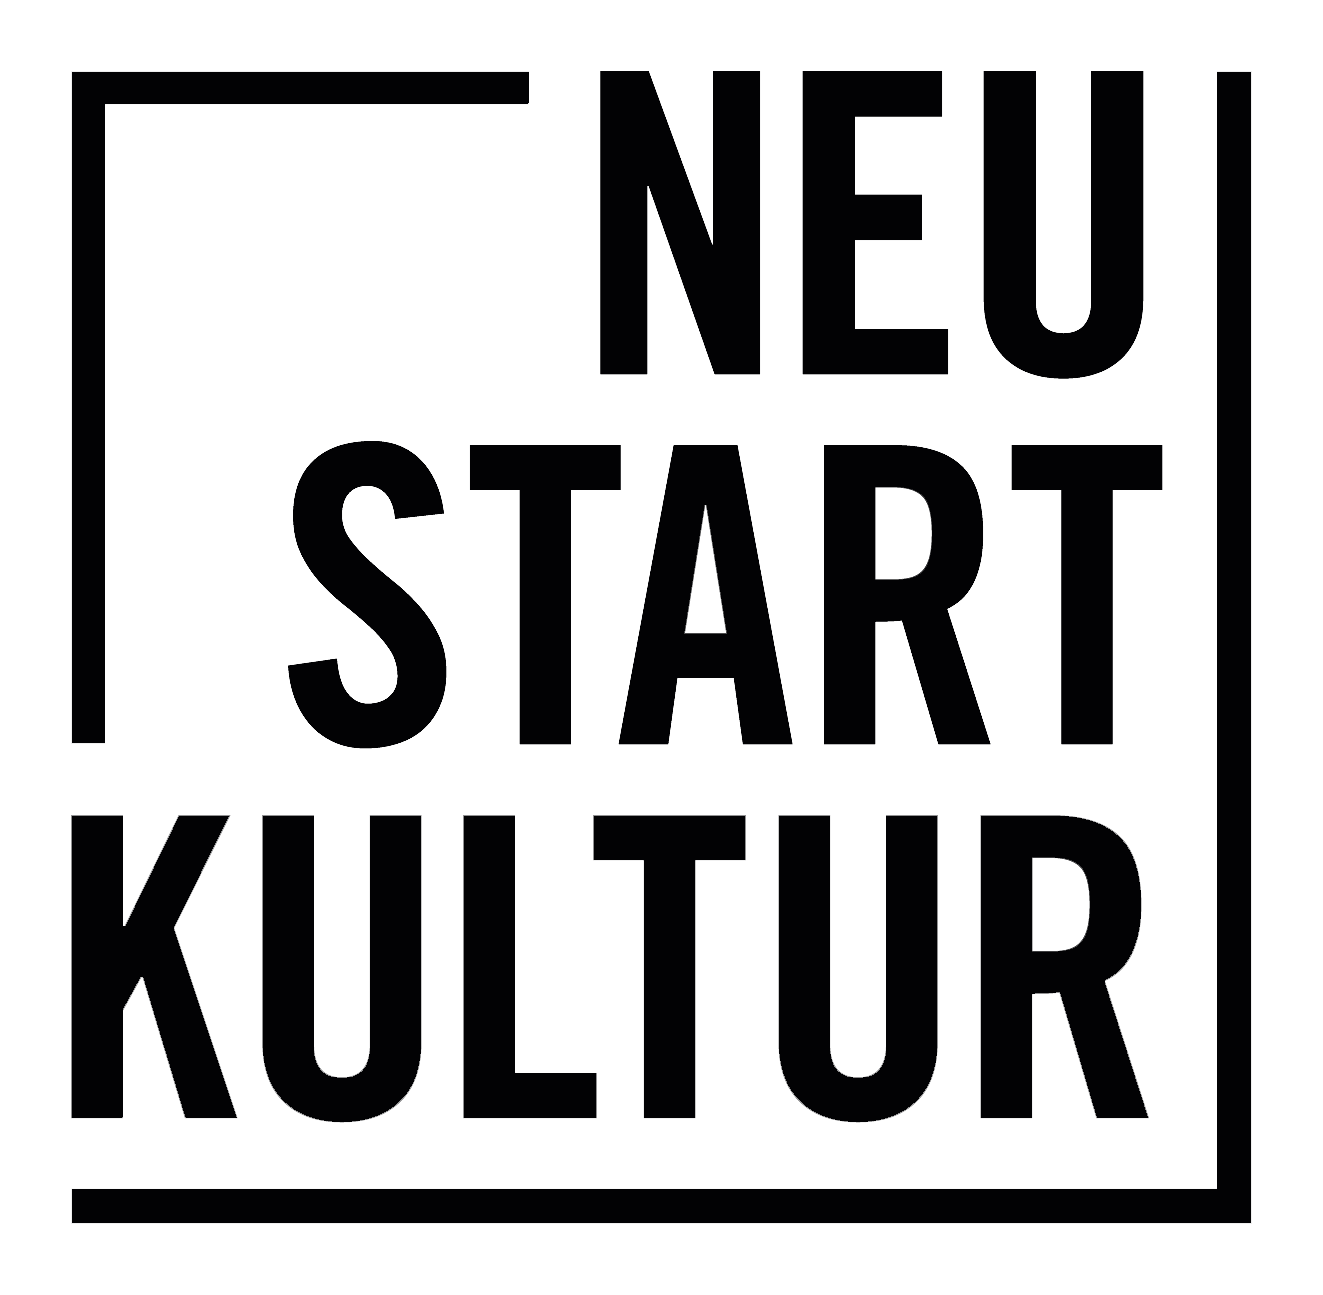 Neu Start Kultur Logo